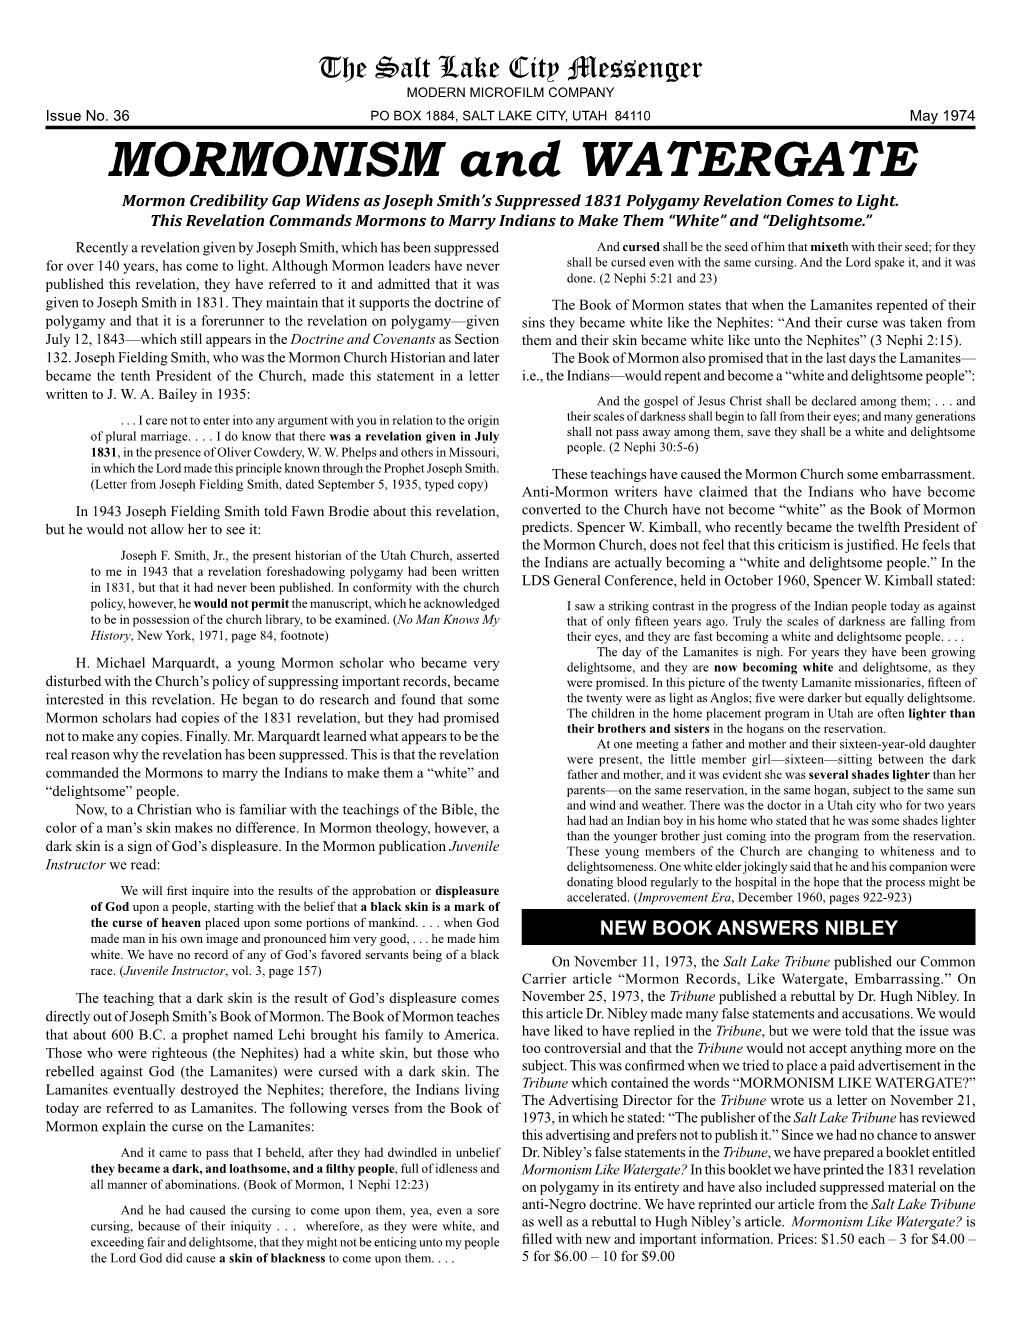 36 Salt Lake City Messenger: Mormonism and Watergate